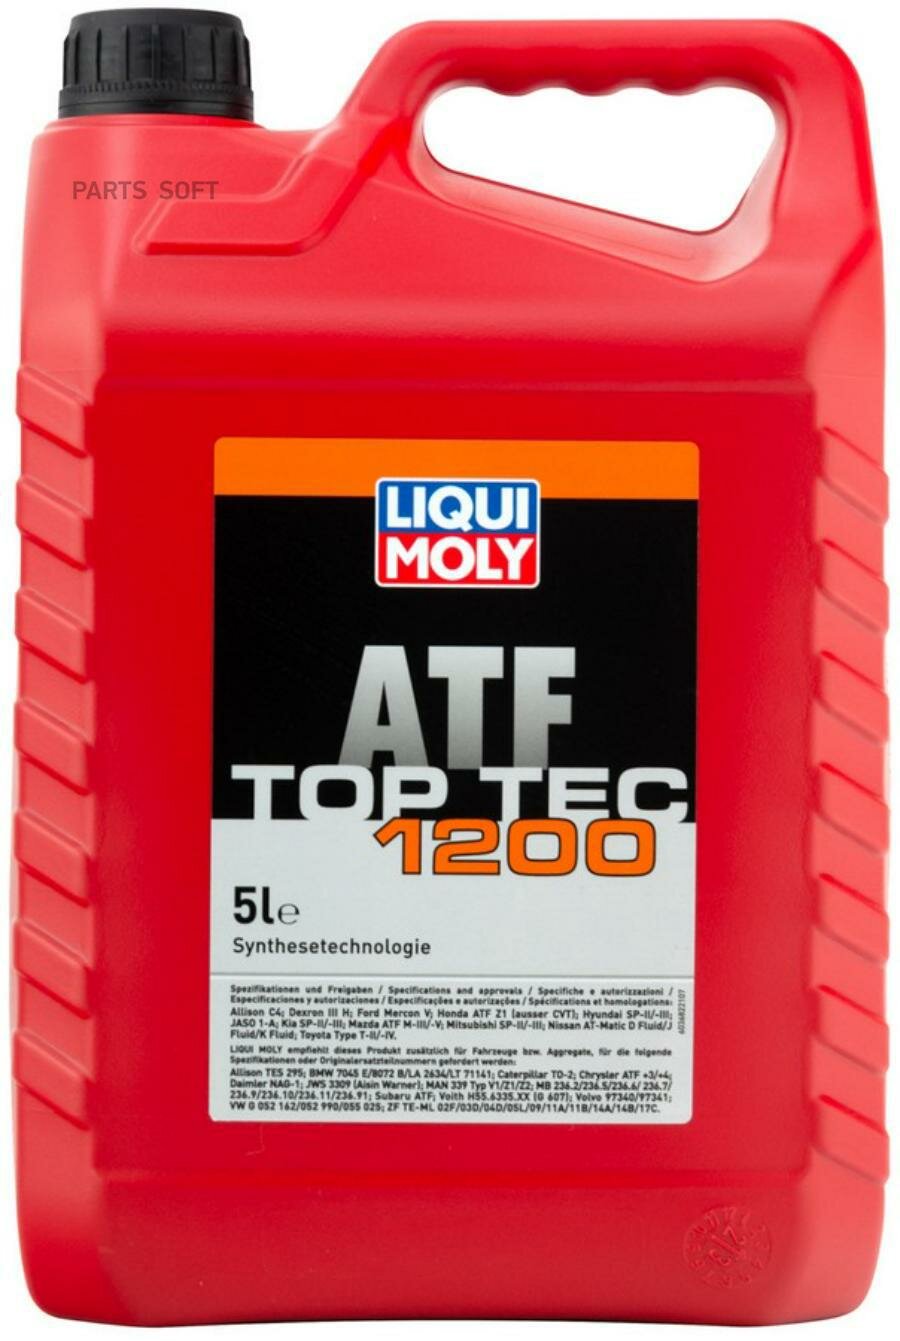 масло для акпп top tec atf 1200 (5l)